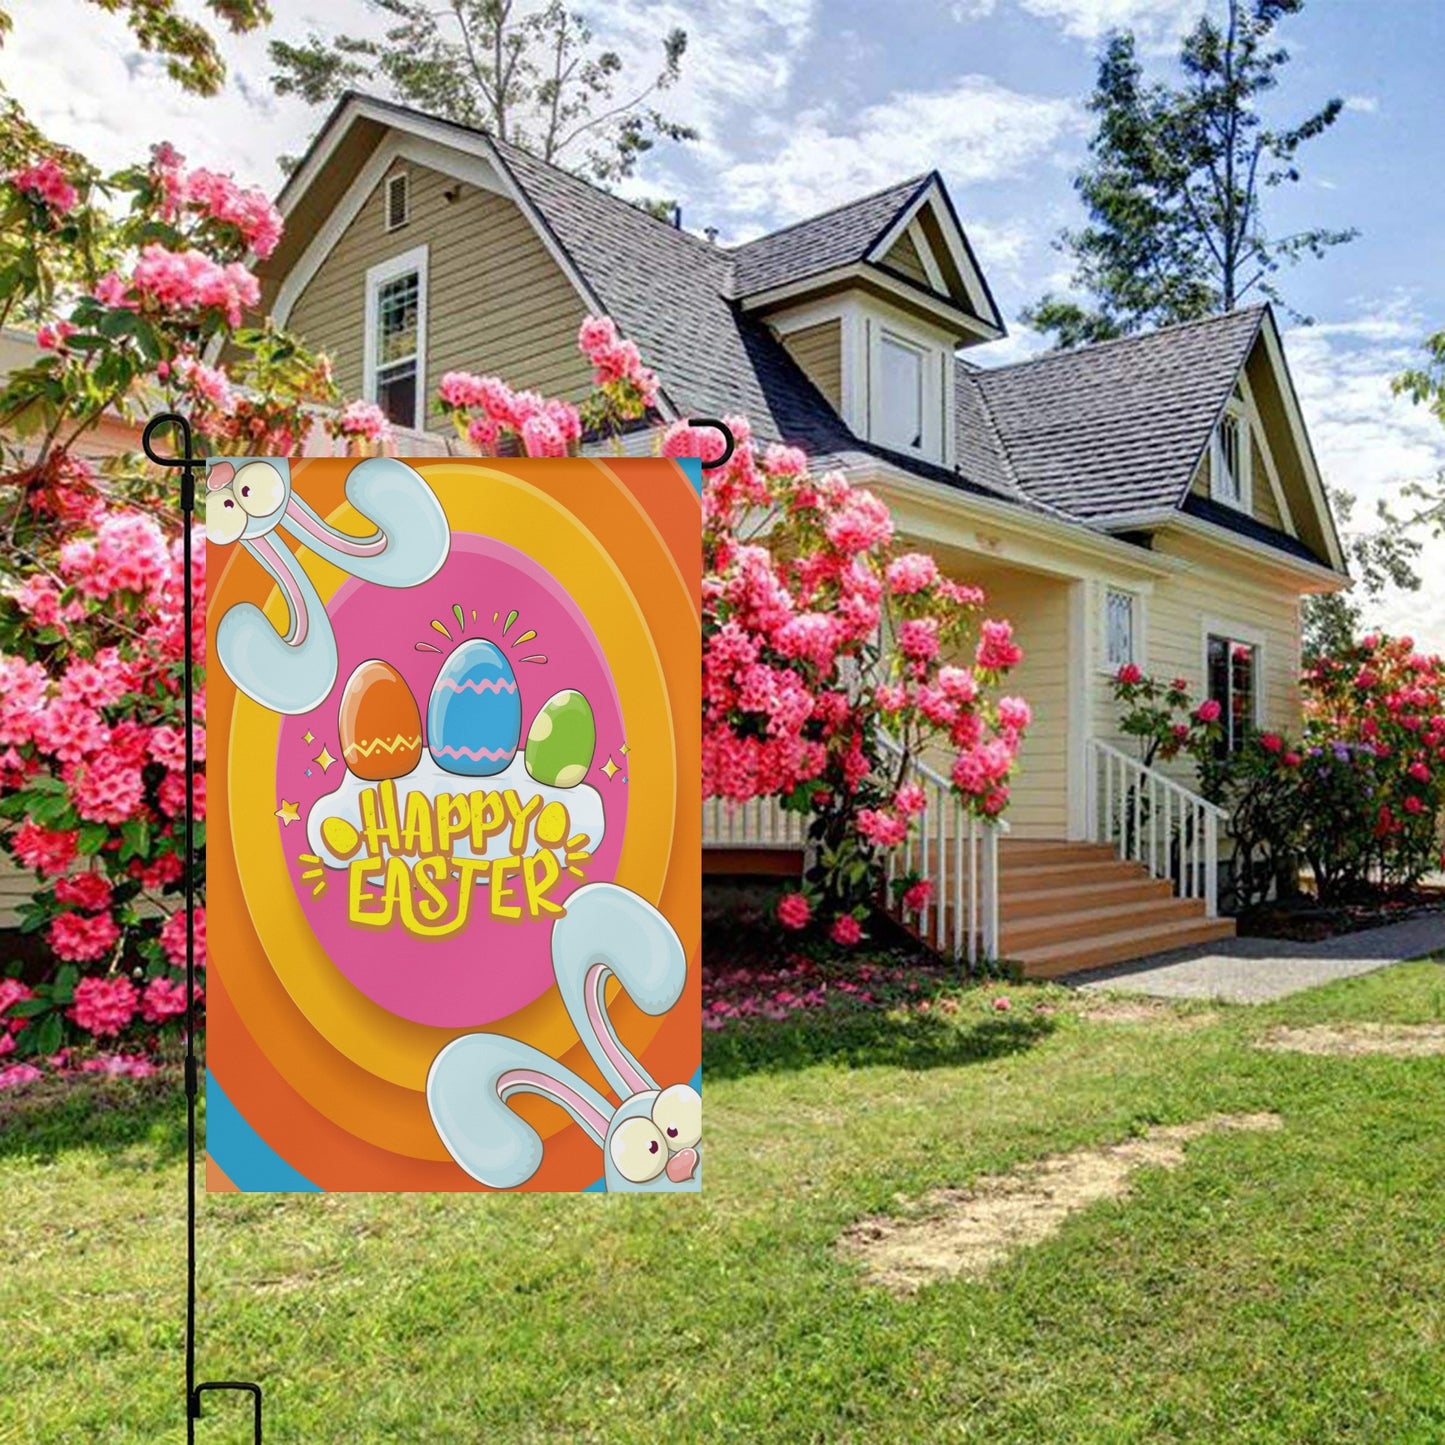 Hoppy Happy Easter on a Satin Garden Flags 12X18 In